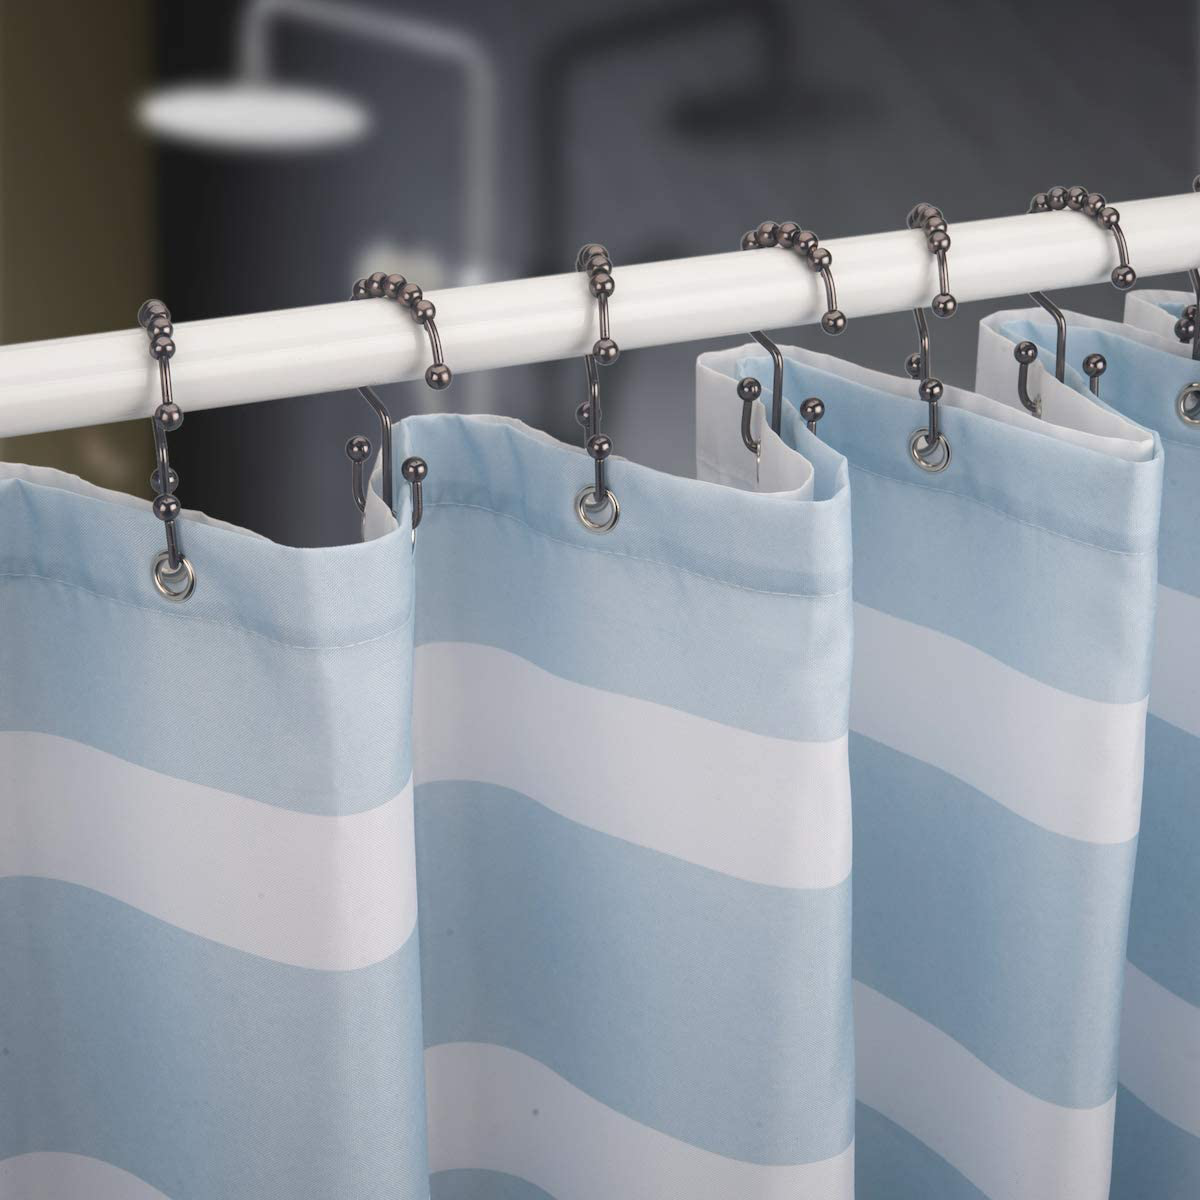 Titanker Shower Curtain Hooks Rings, Rust-Resistant Metal Double Glide Shower Hooks for Bathroom Shower Rods Curtains, Set of 12 Hooks